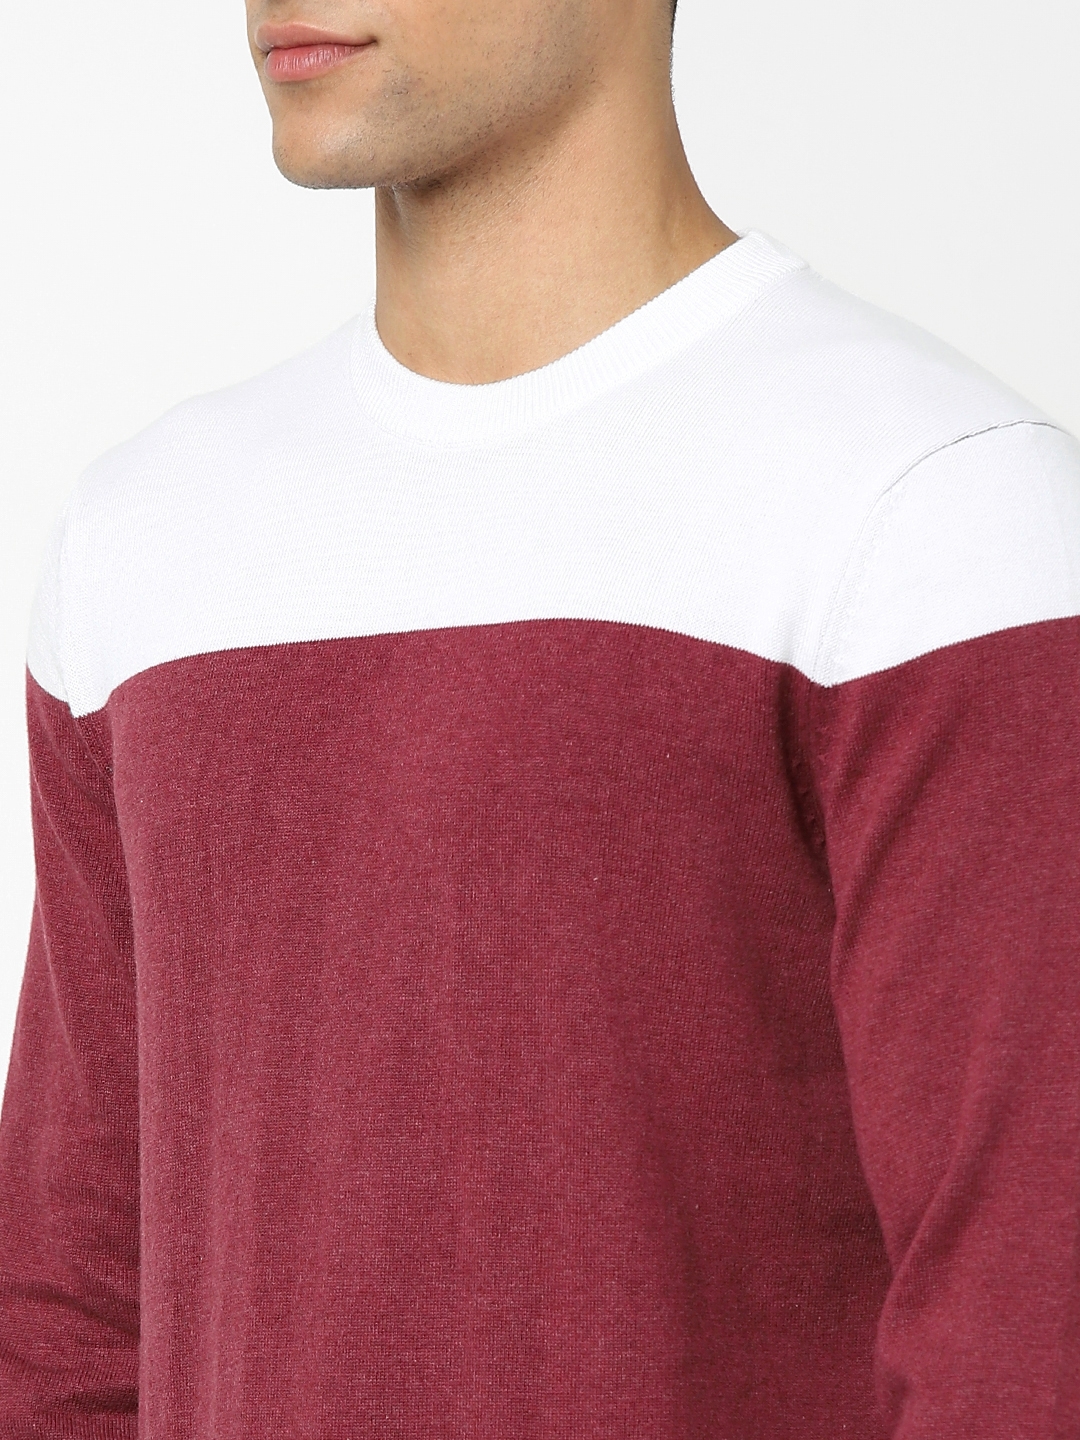 Men's Burgundy Colourblock Sweaters